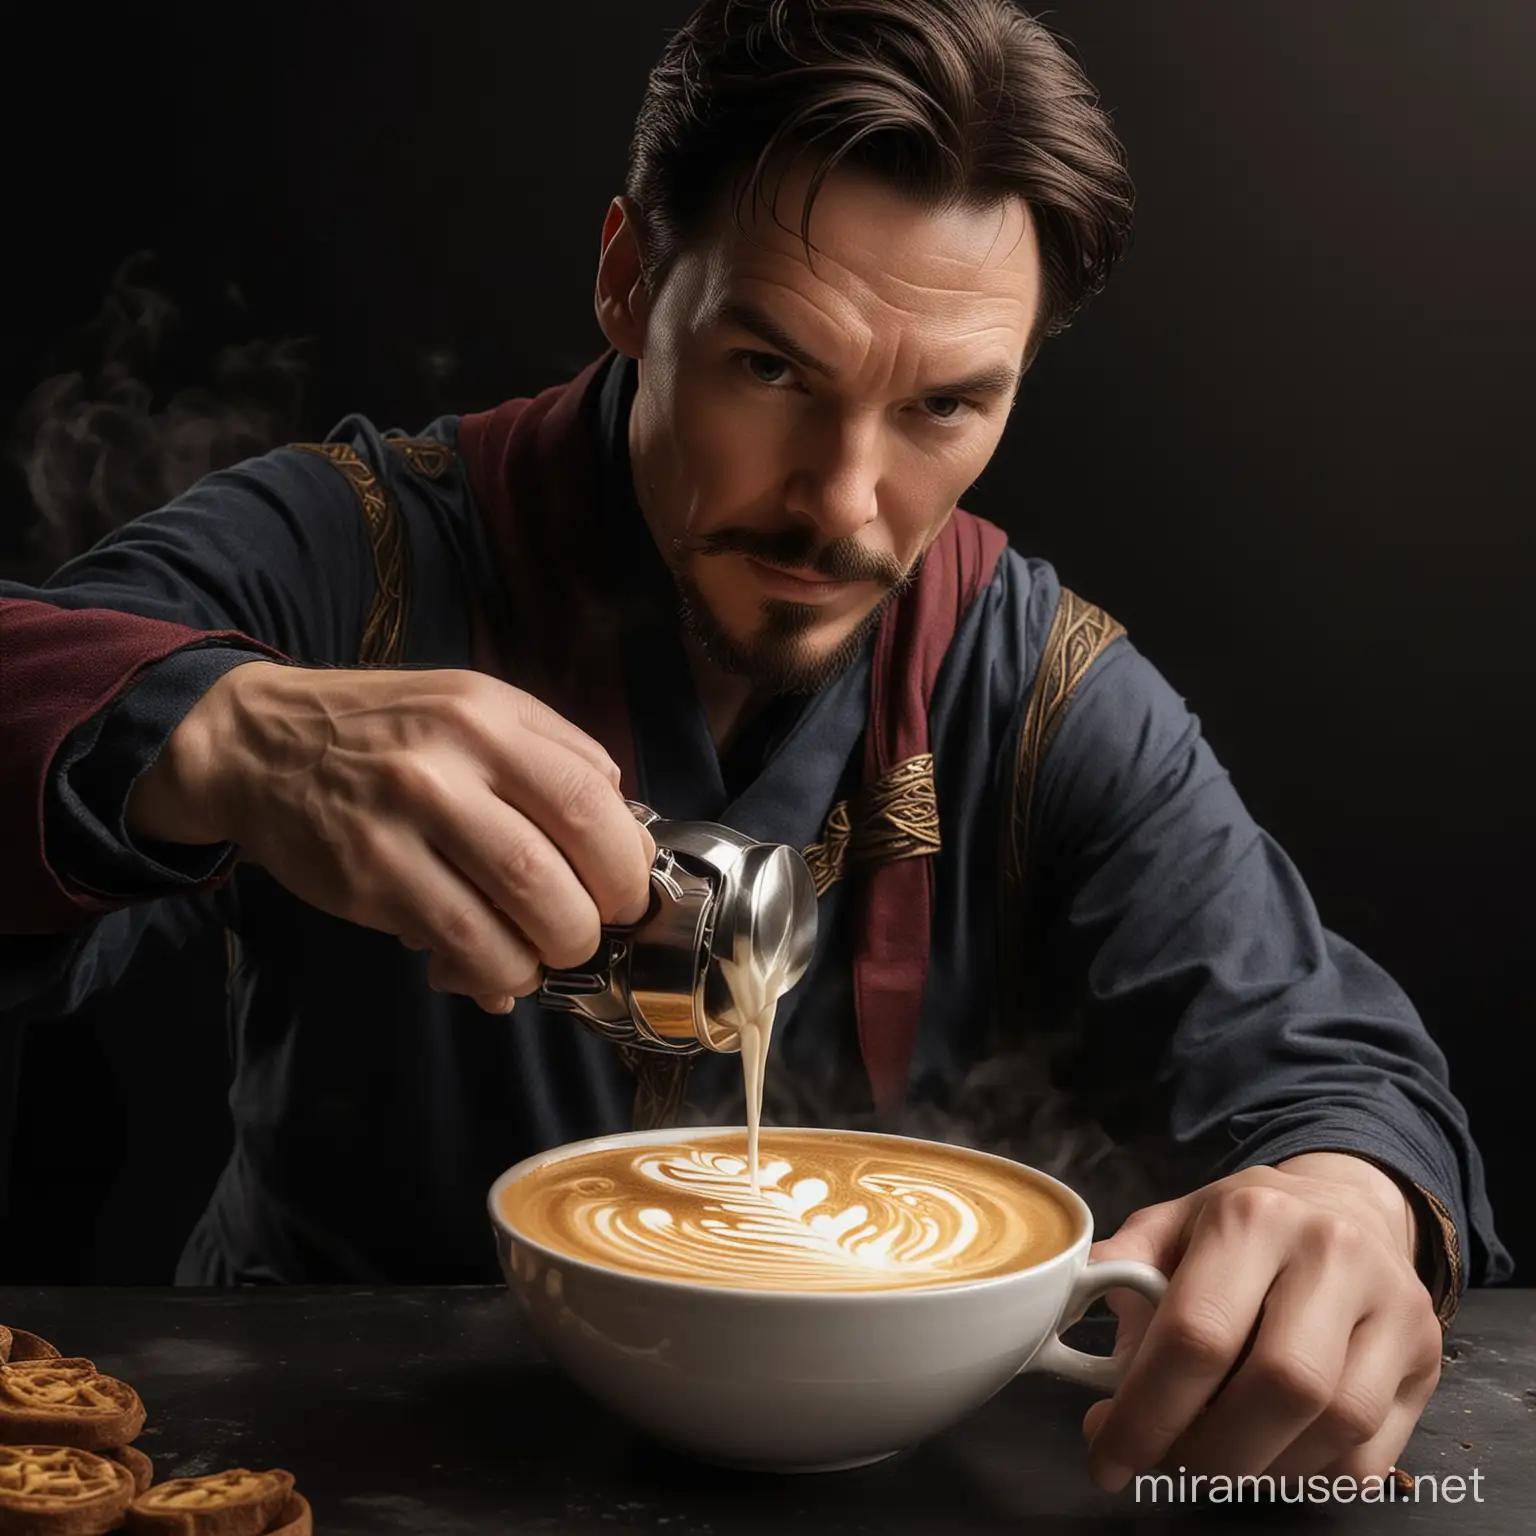 dr strange making latte art, black background,
